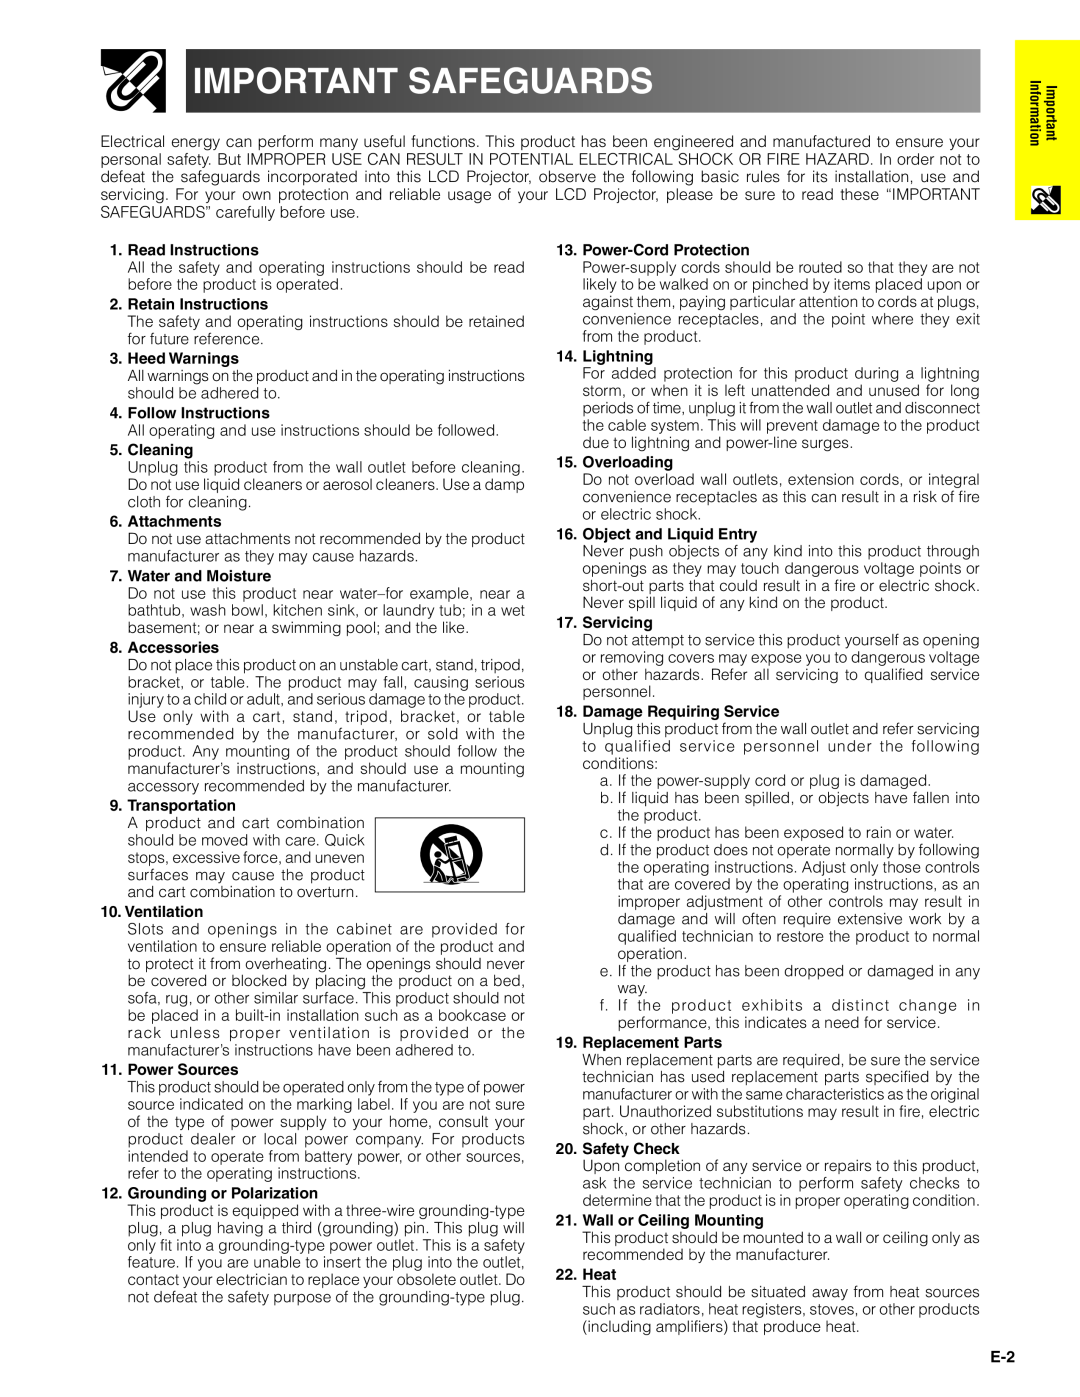 Sharp XG-V10XU operation manual Important Safeguards 